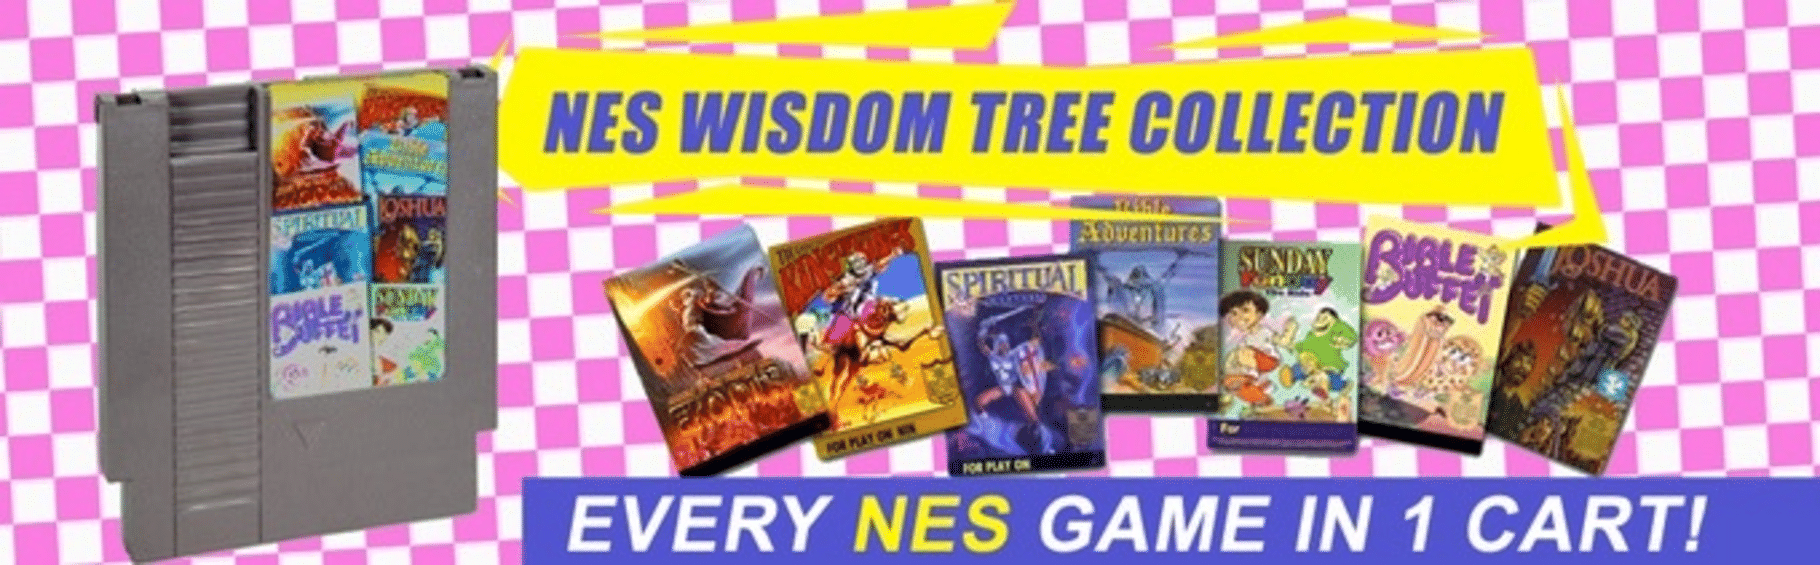 Wisdom Tree Collection screenshot